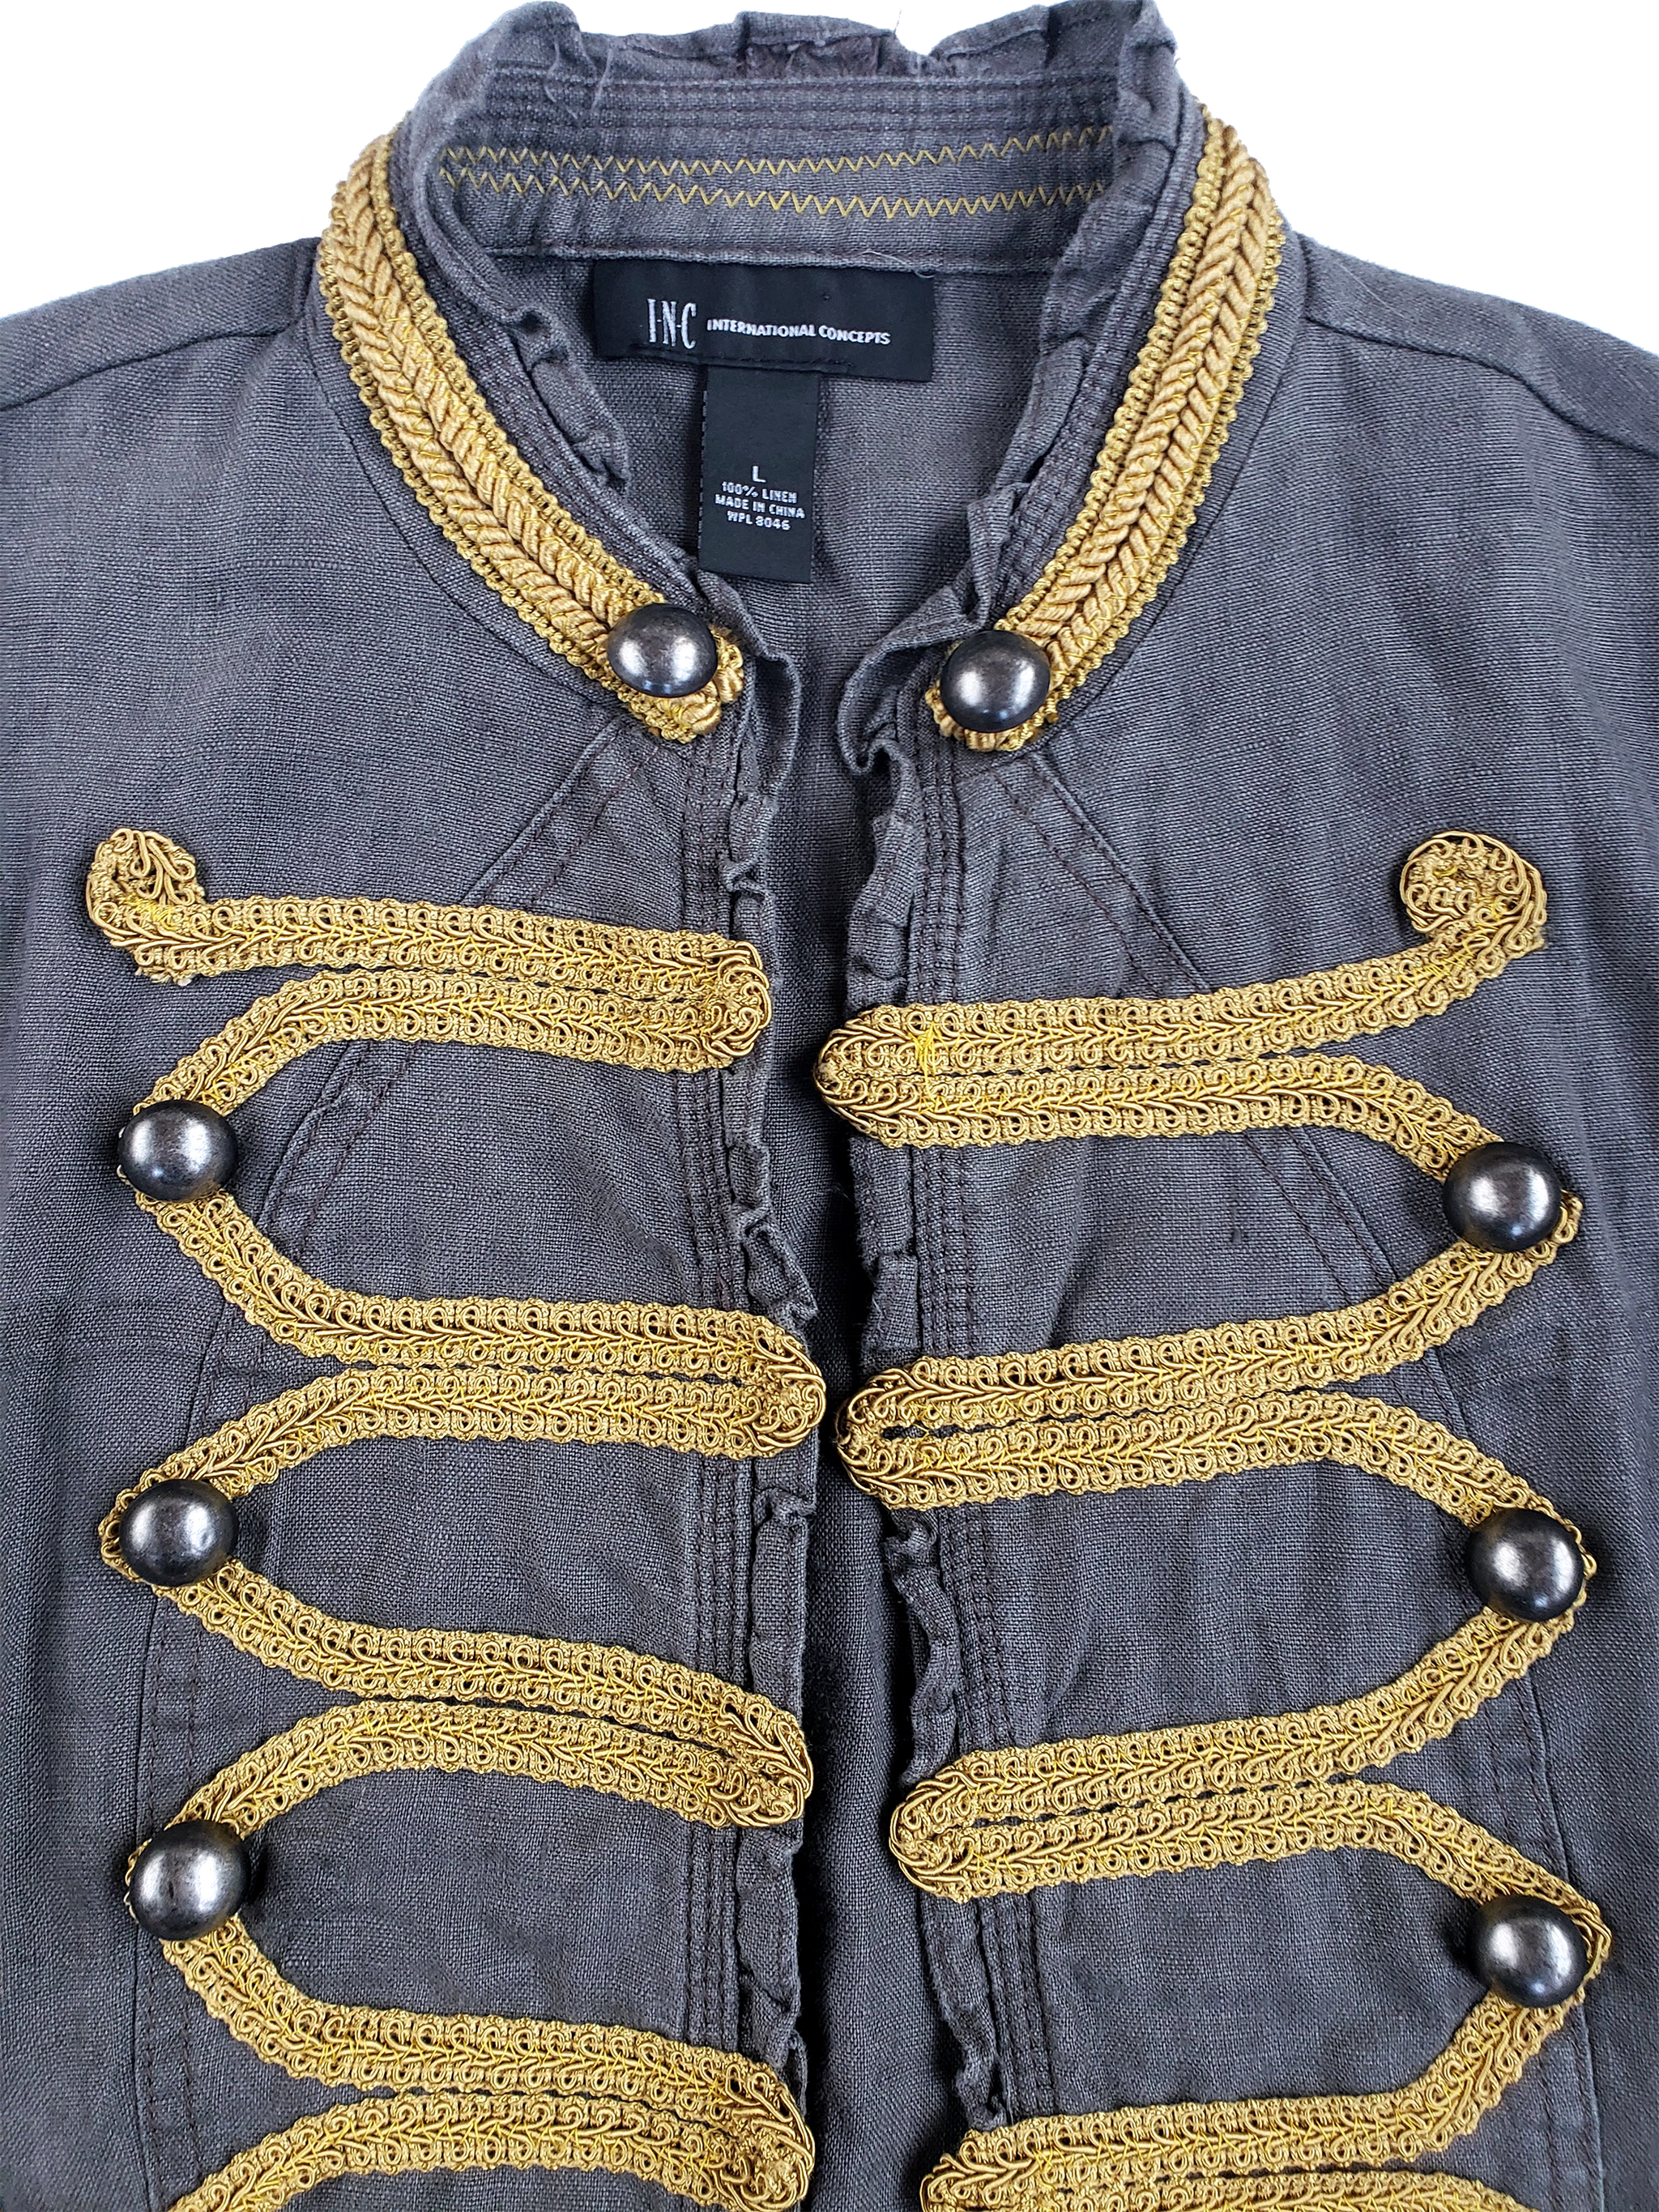 #thejacketproject - Vintage Military Style Rocker Jacket #3